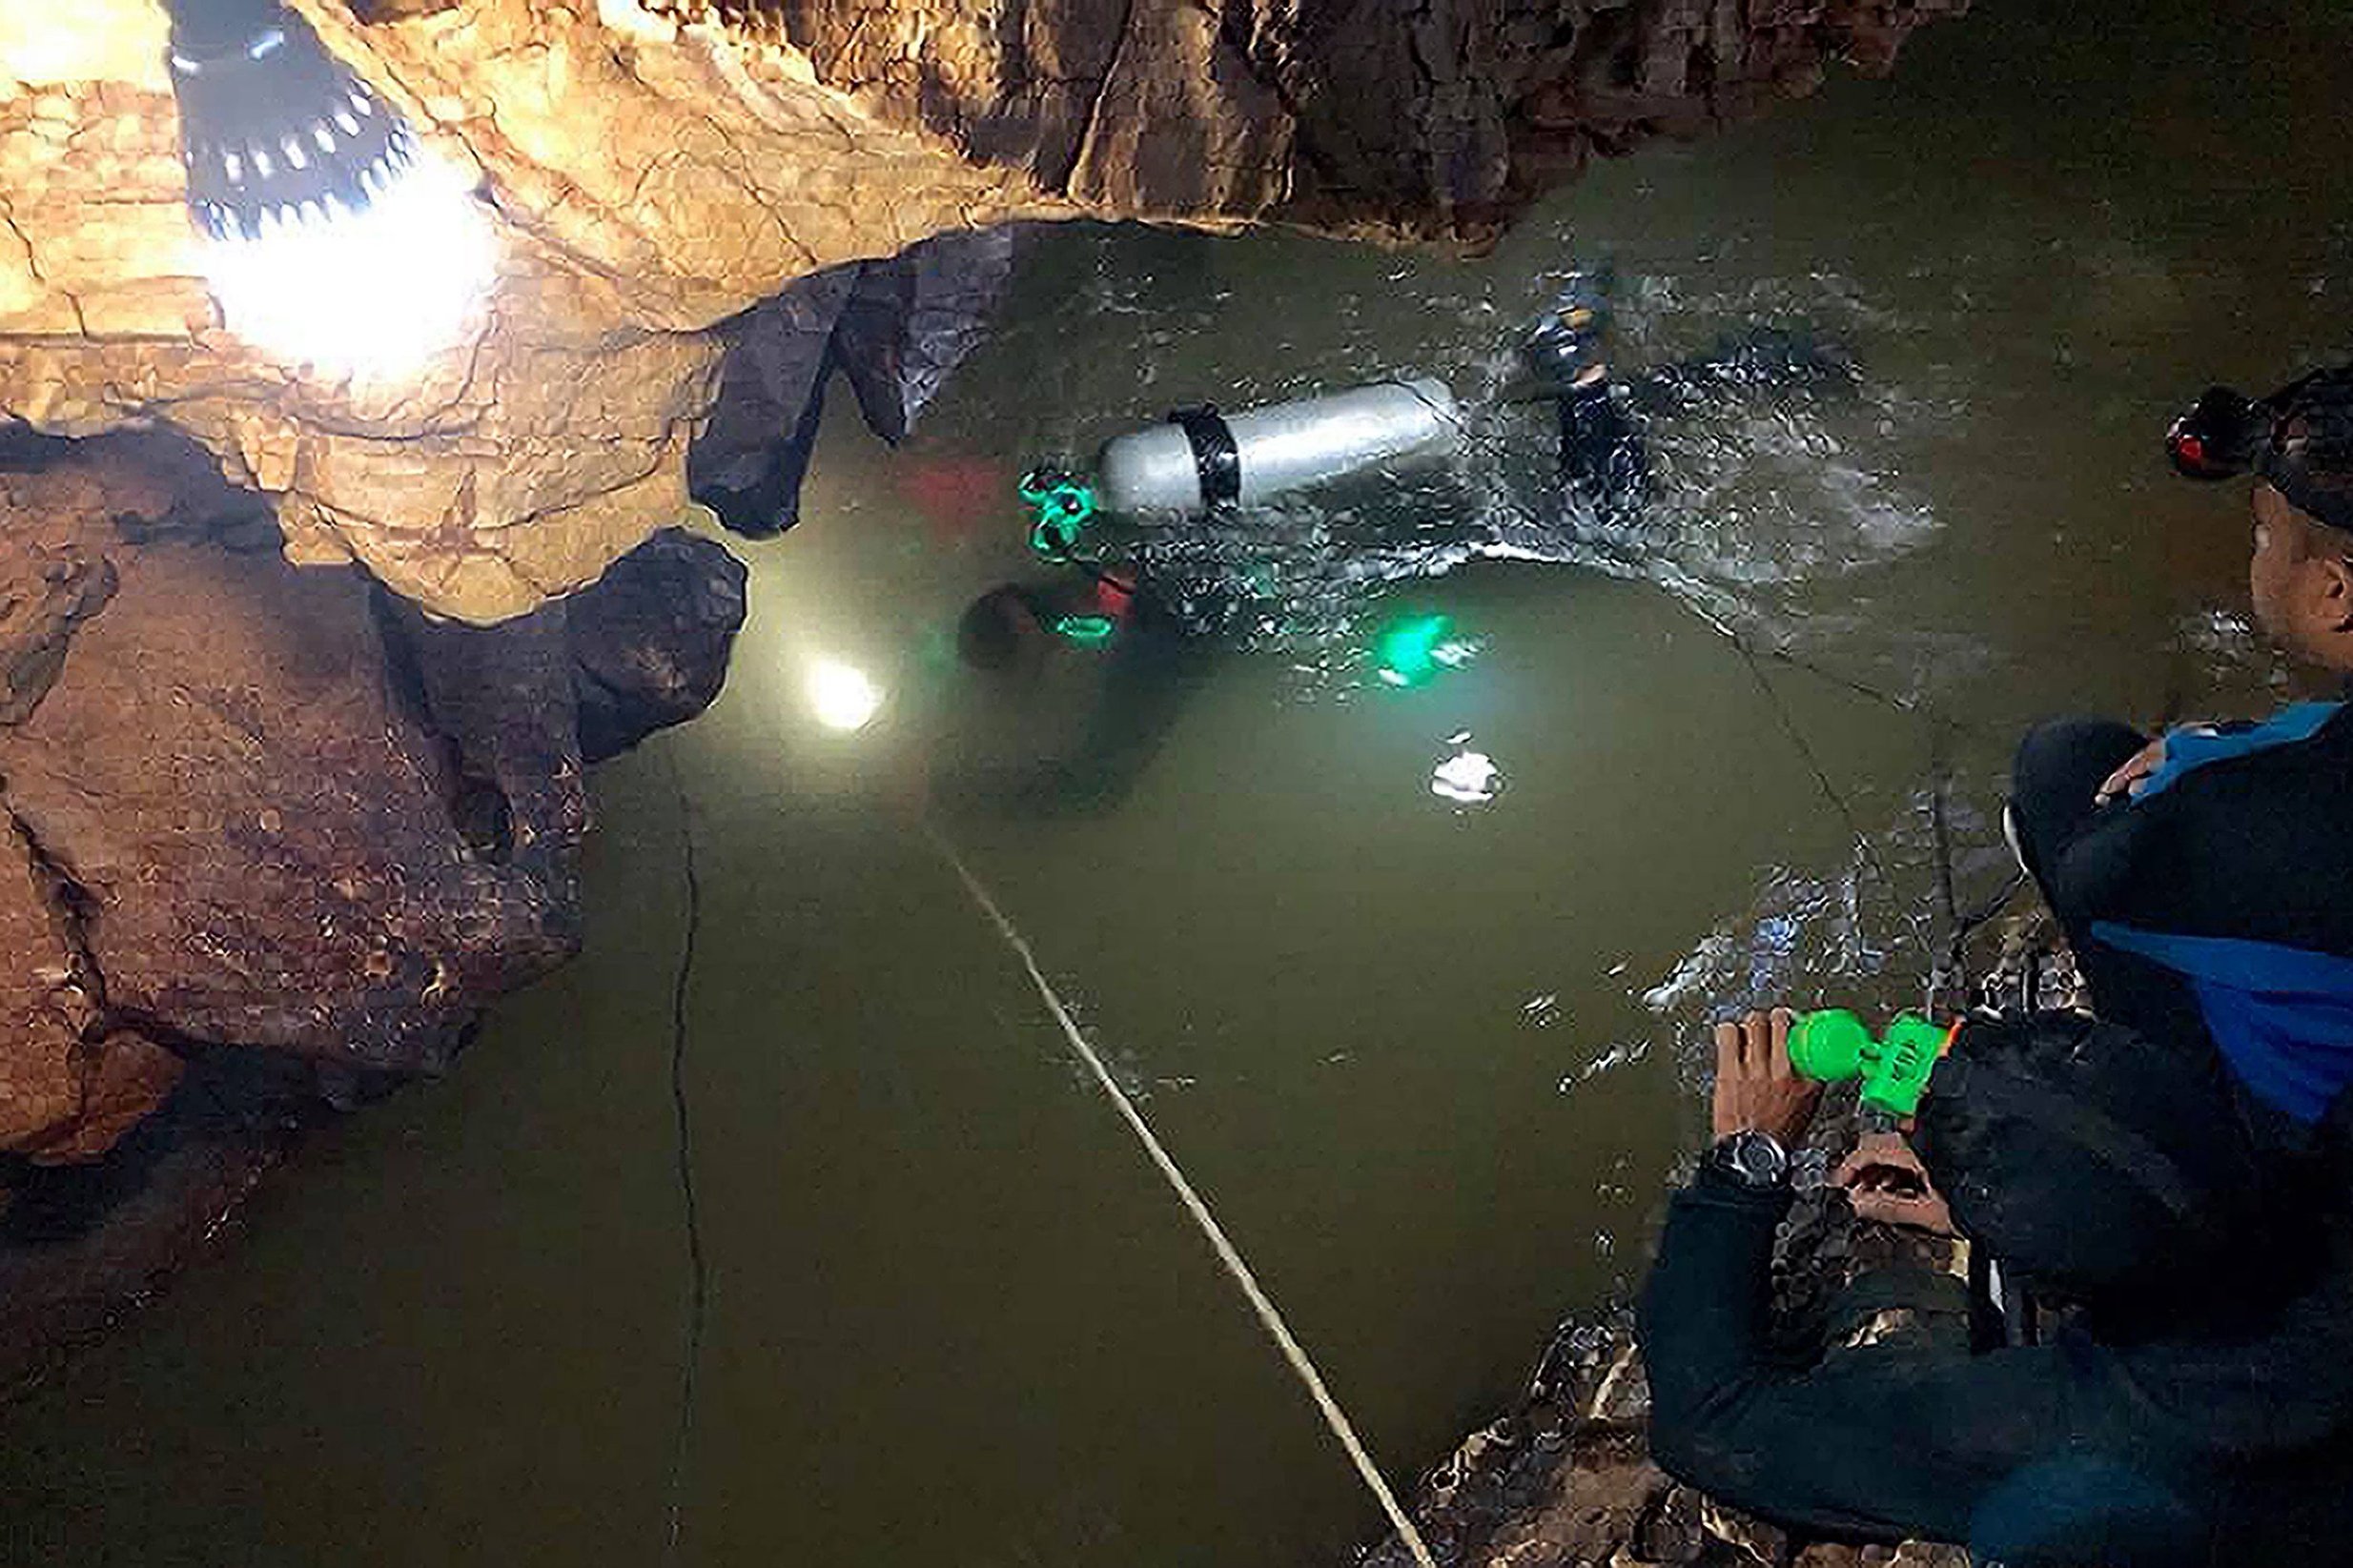 Diver dies in Thailand cave rescue attempts